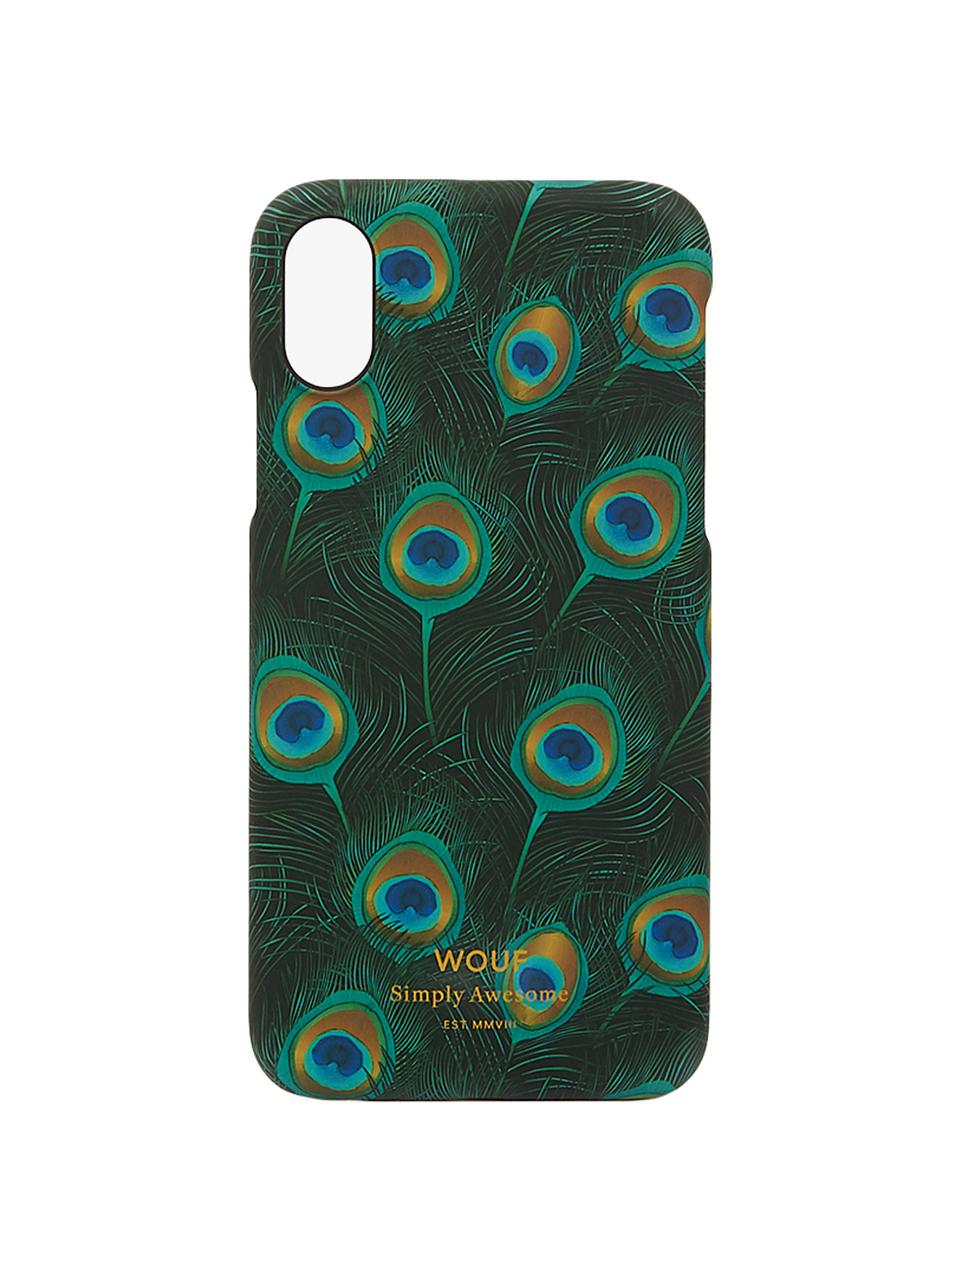 Hülle Peacock für iPhone X, Silikon, Schwarz, Mehrfarbig, 7 x 15 cm